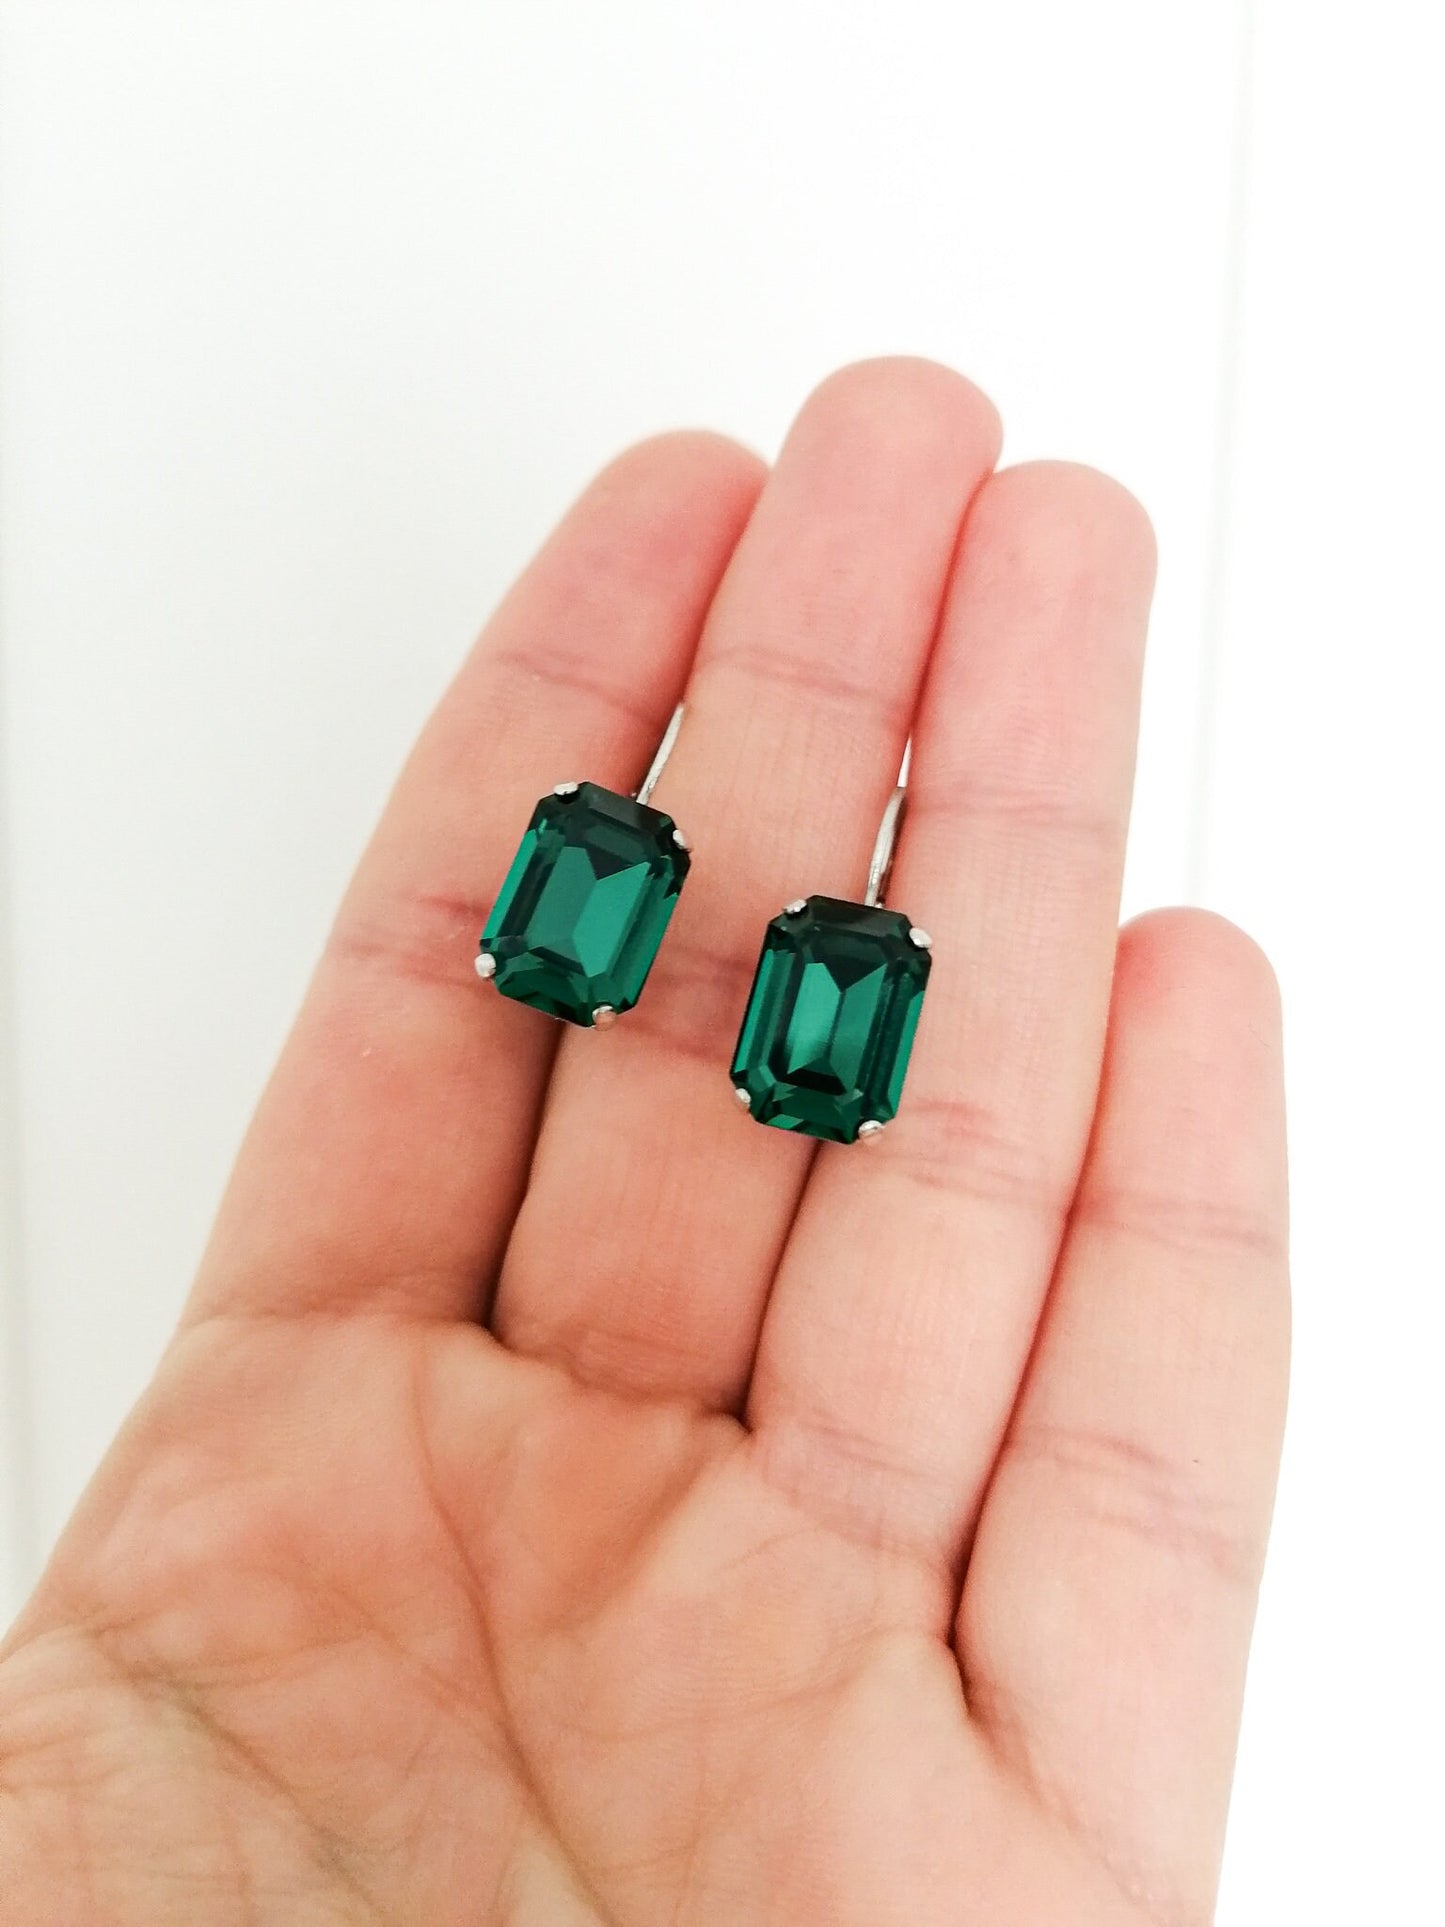 Nova earrings - emerald green